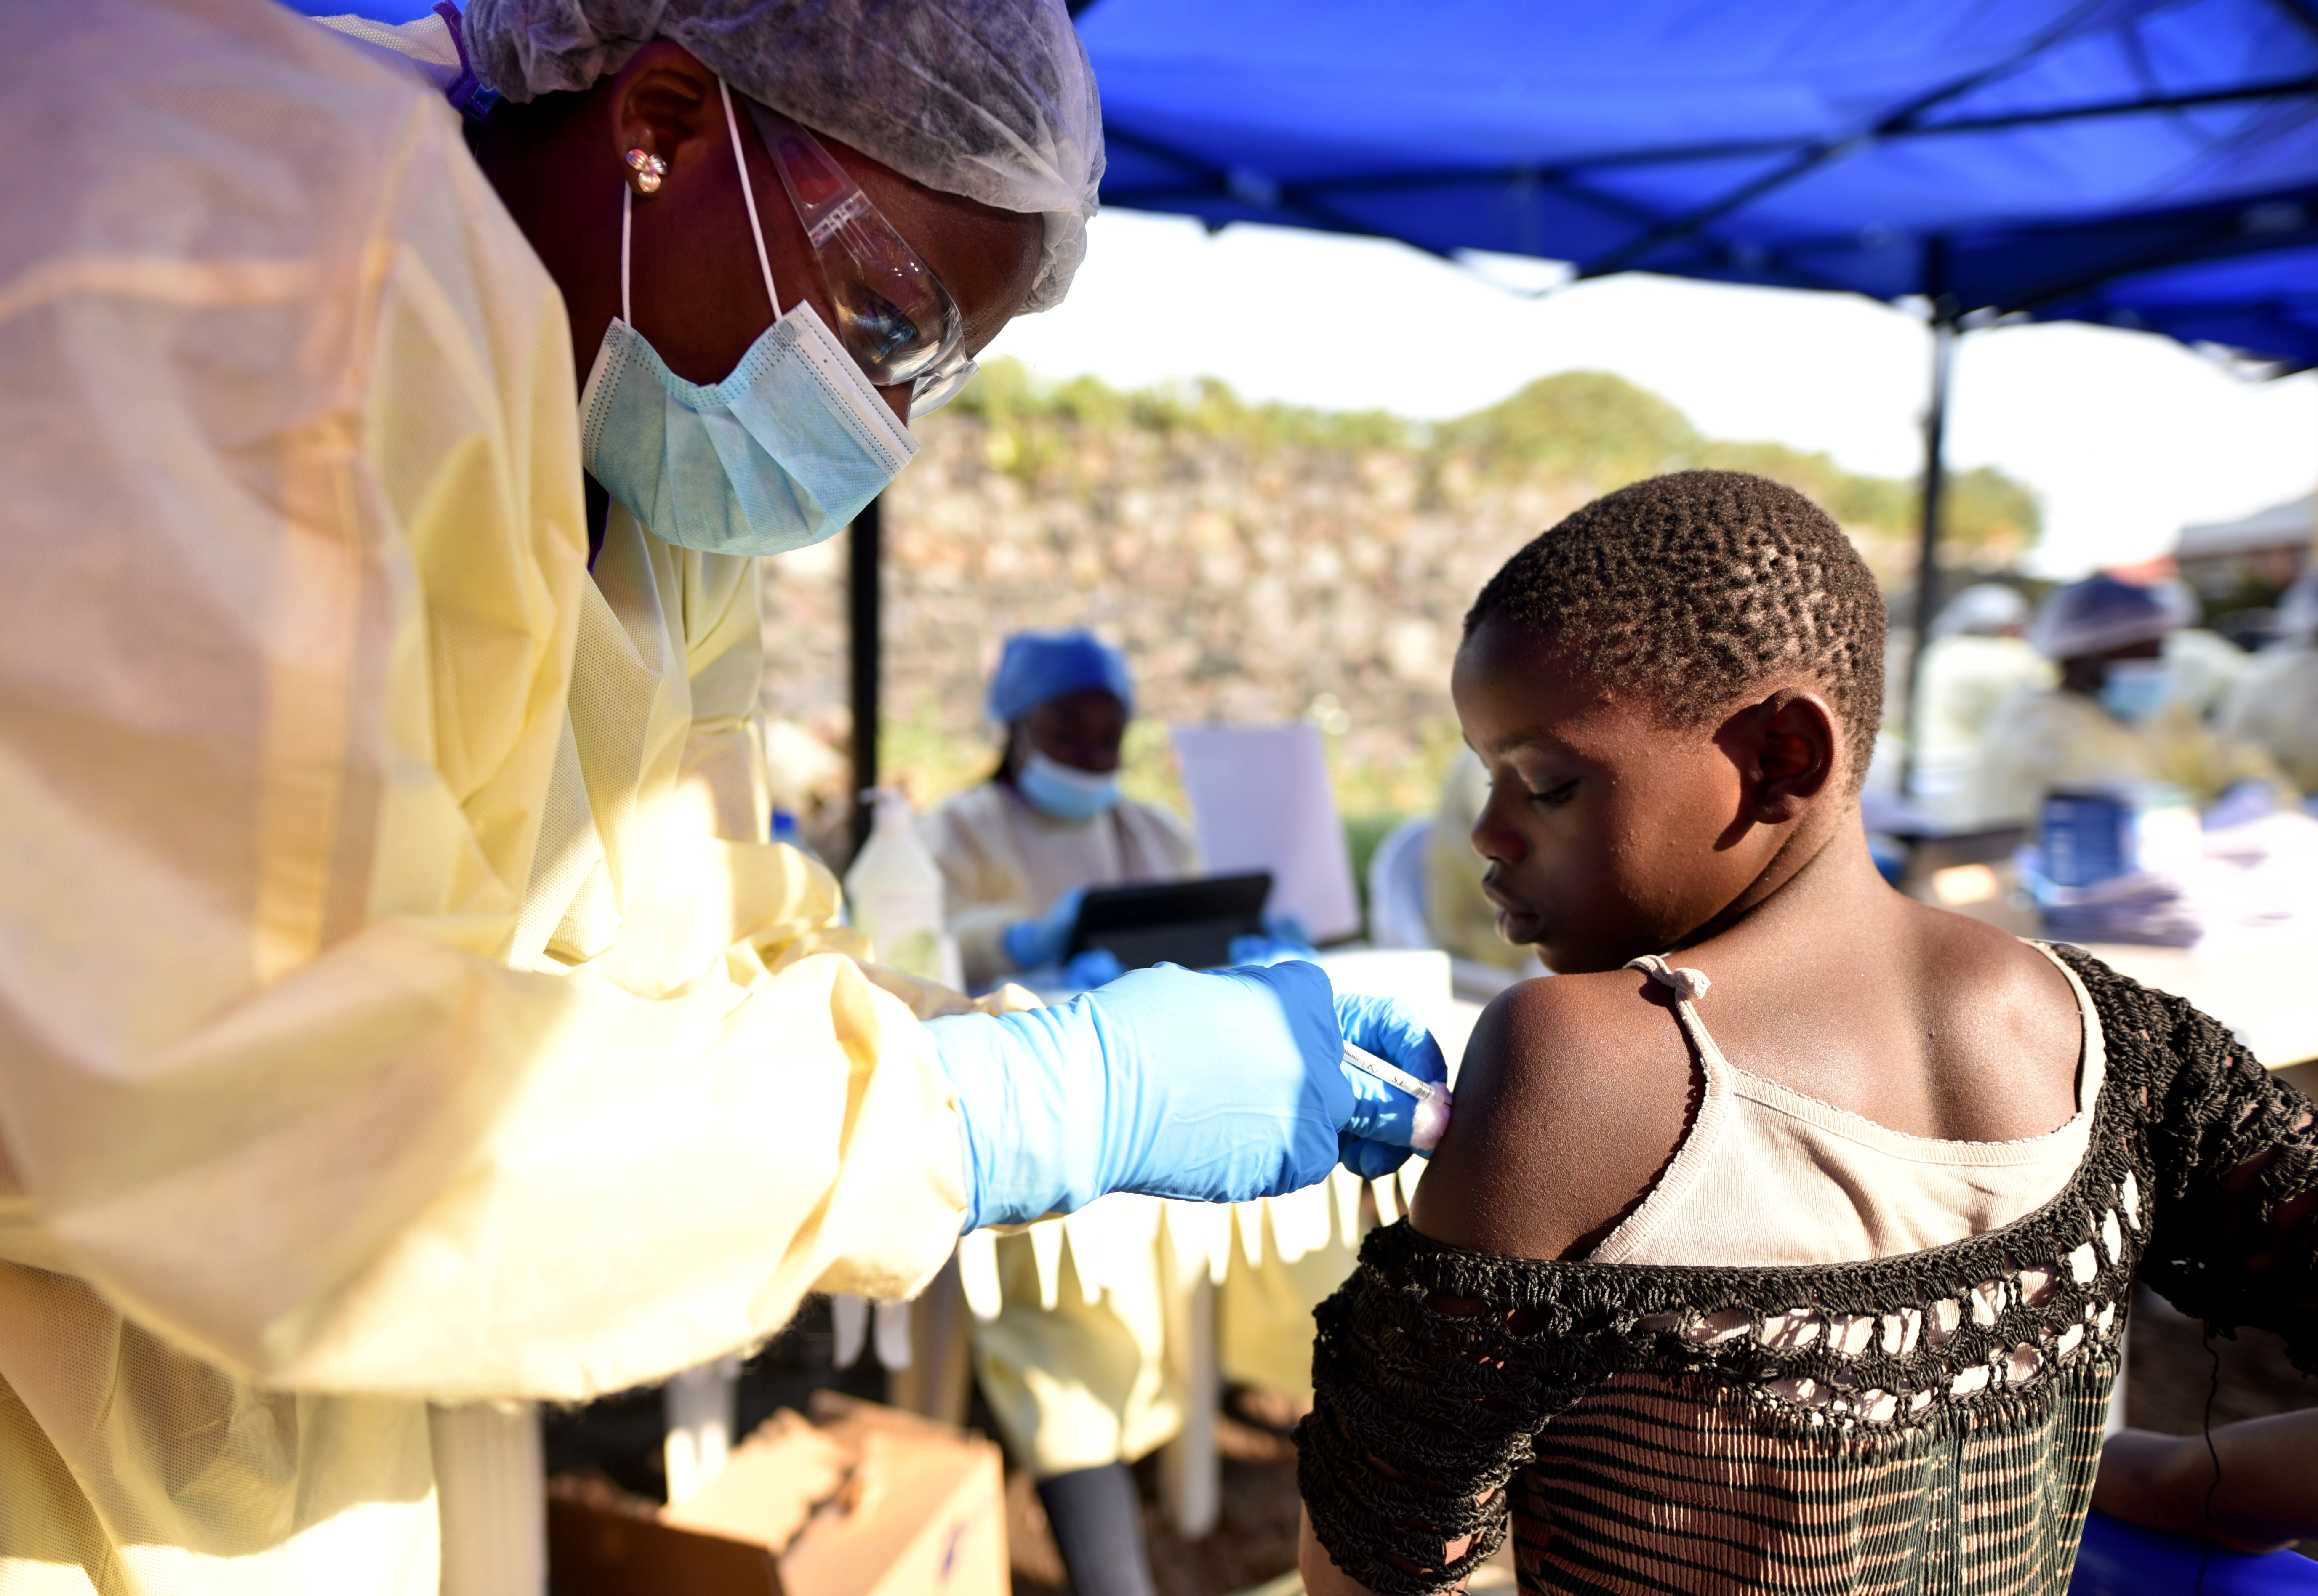 Création d'un stock mondial de vaccins contre le virus Ebola